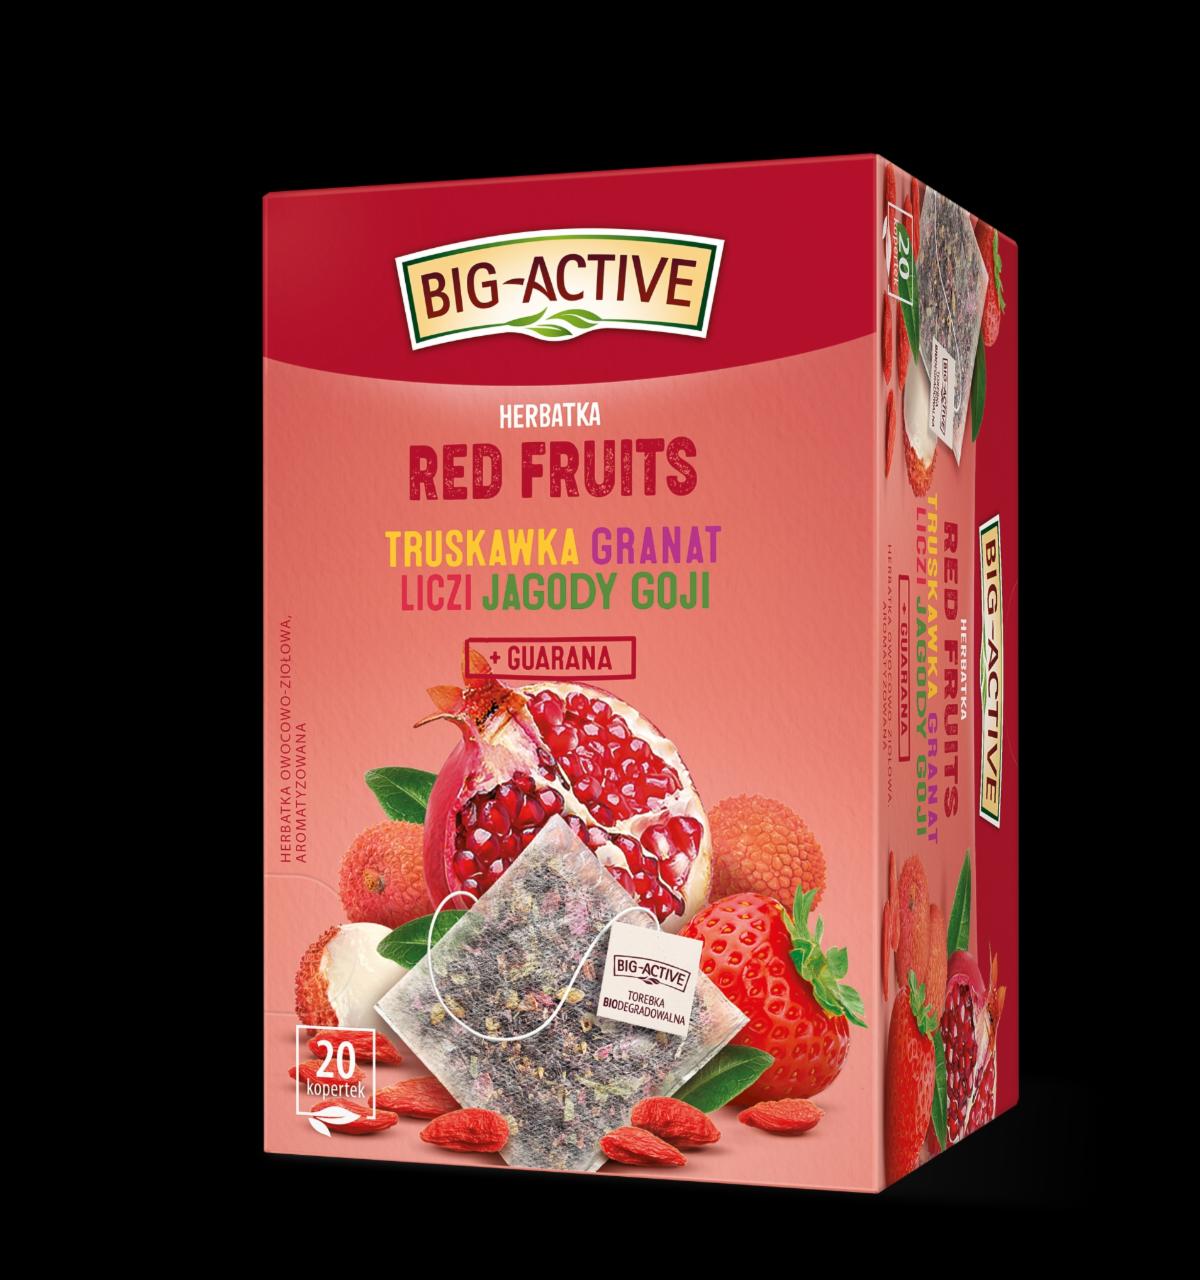 Zdjęcia - Herbatka red fruits Big-Active